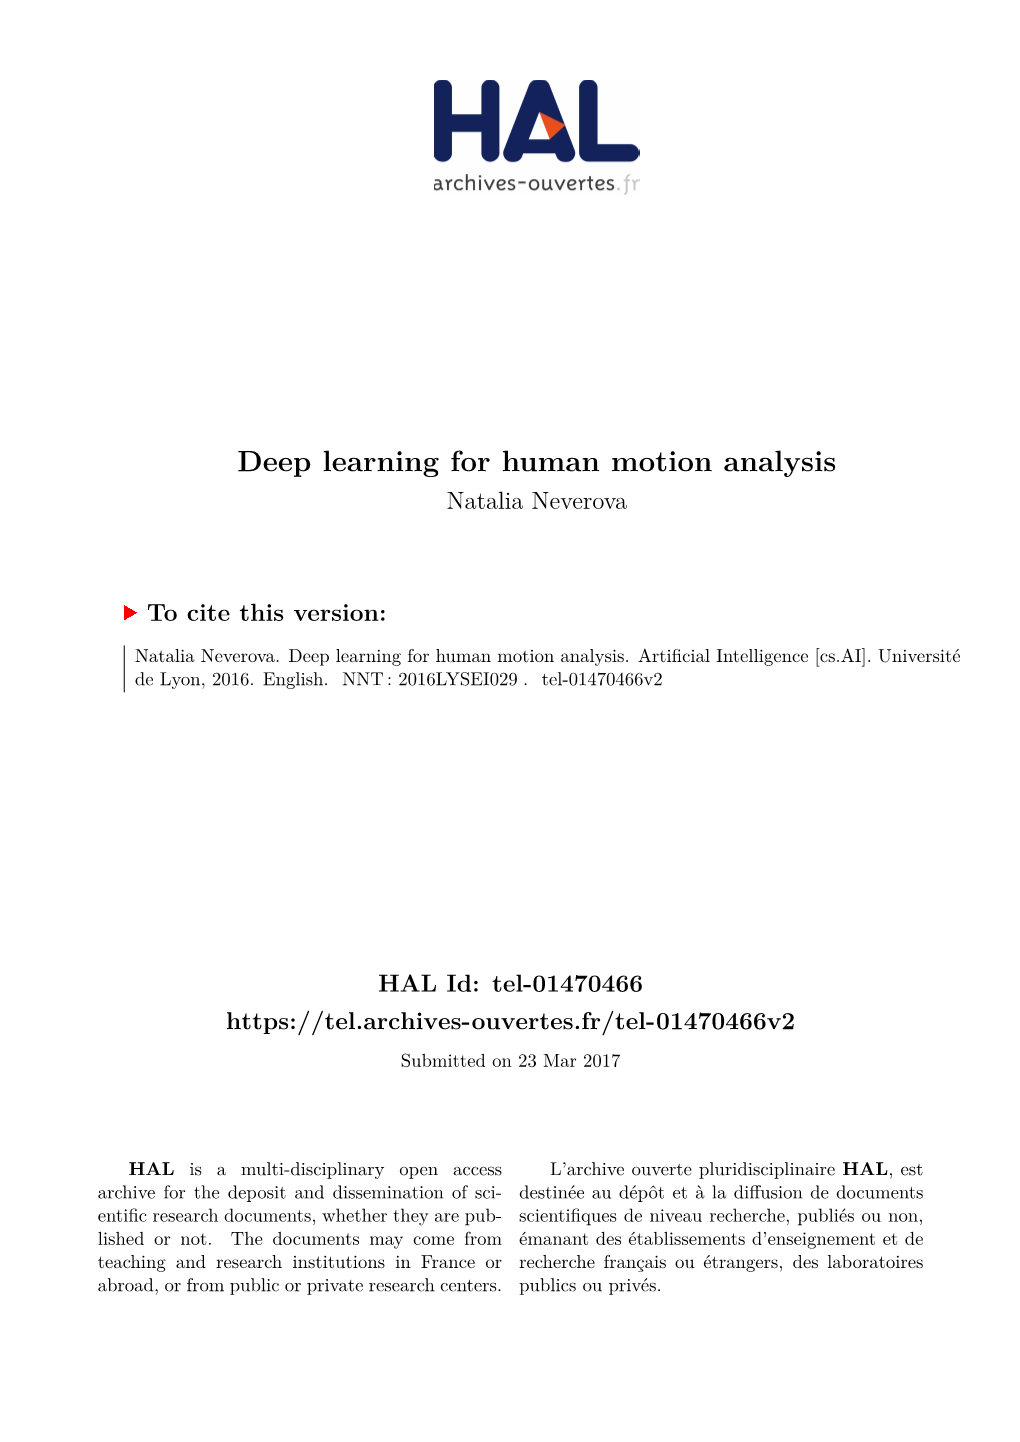 Deep Learning for Human Motion Analysis Natalia Neverova